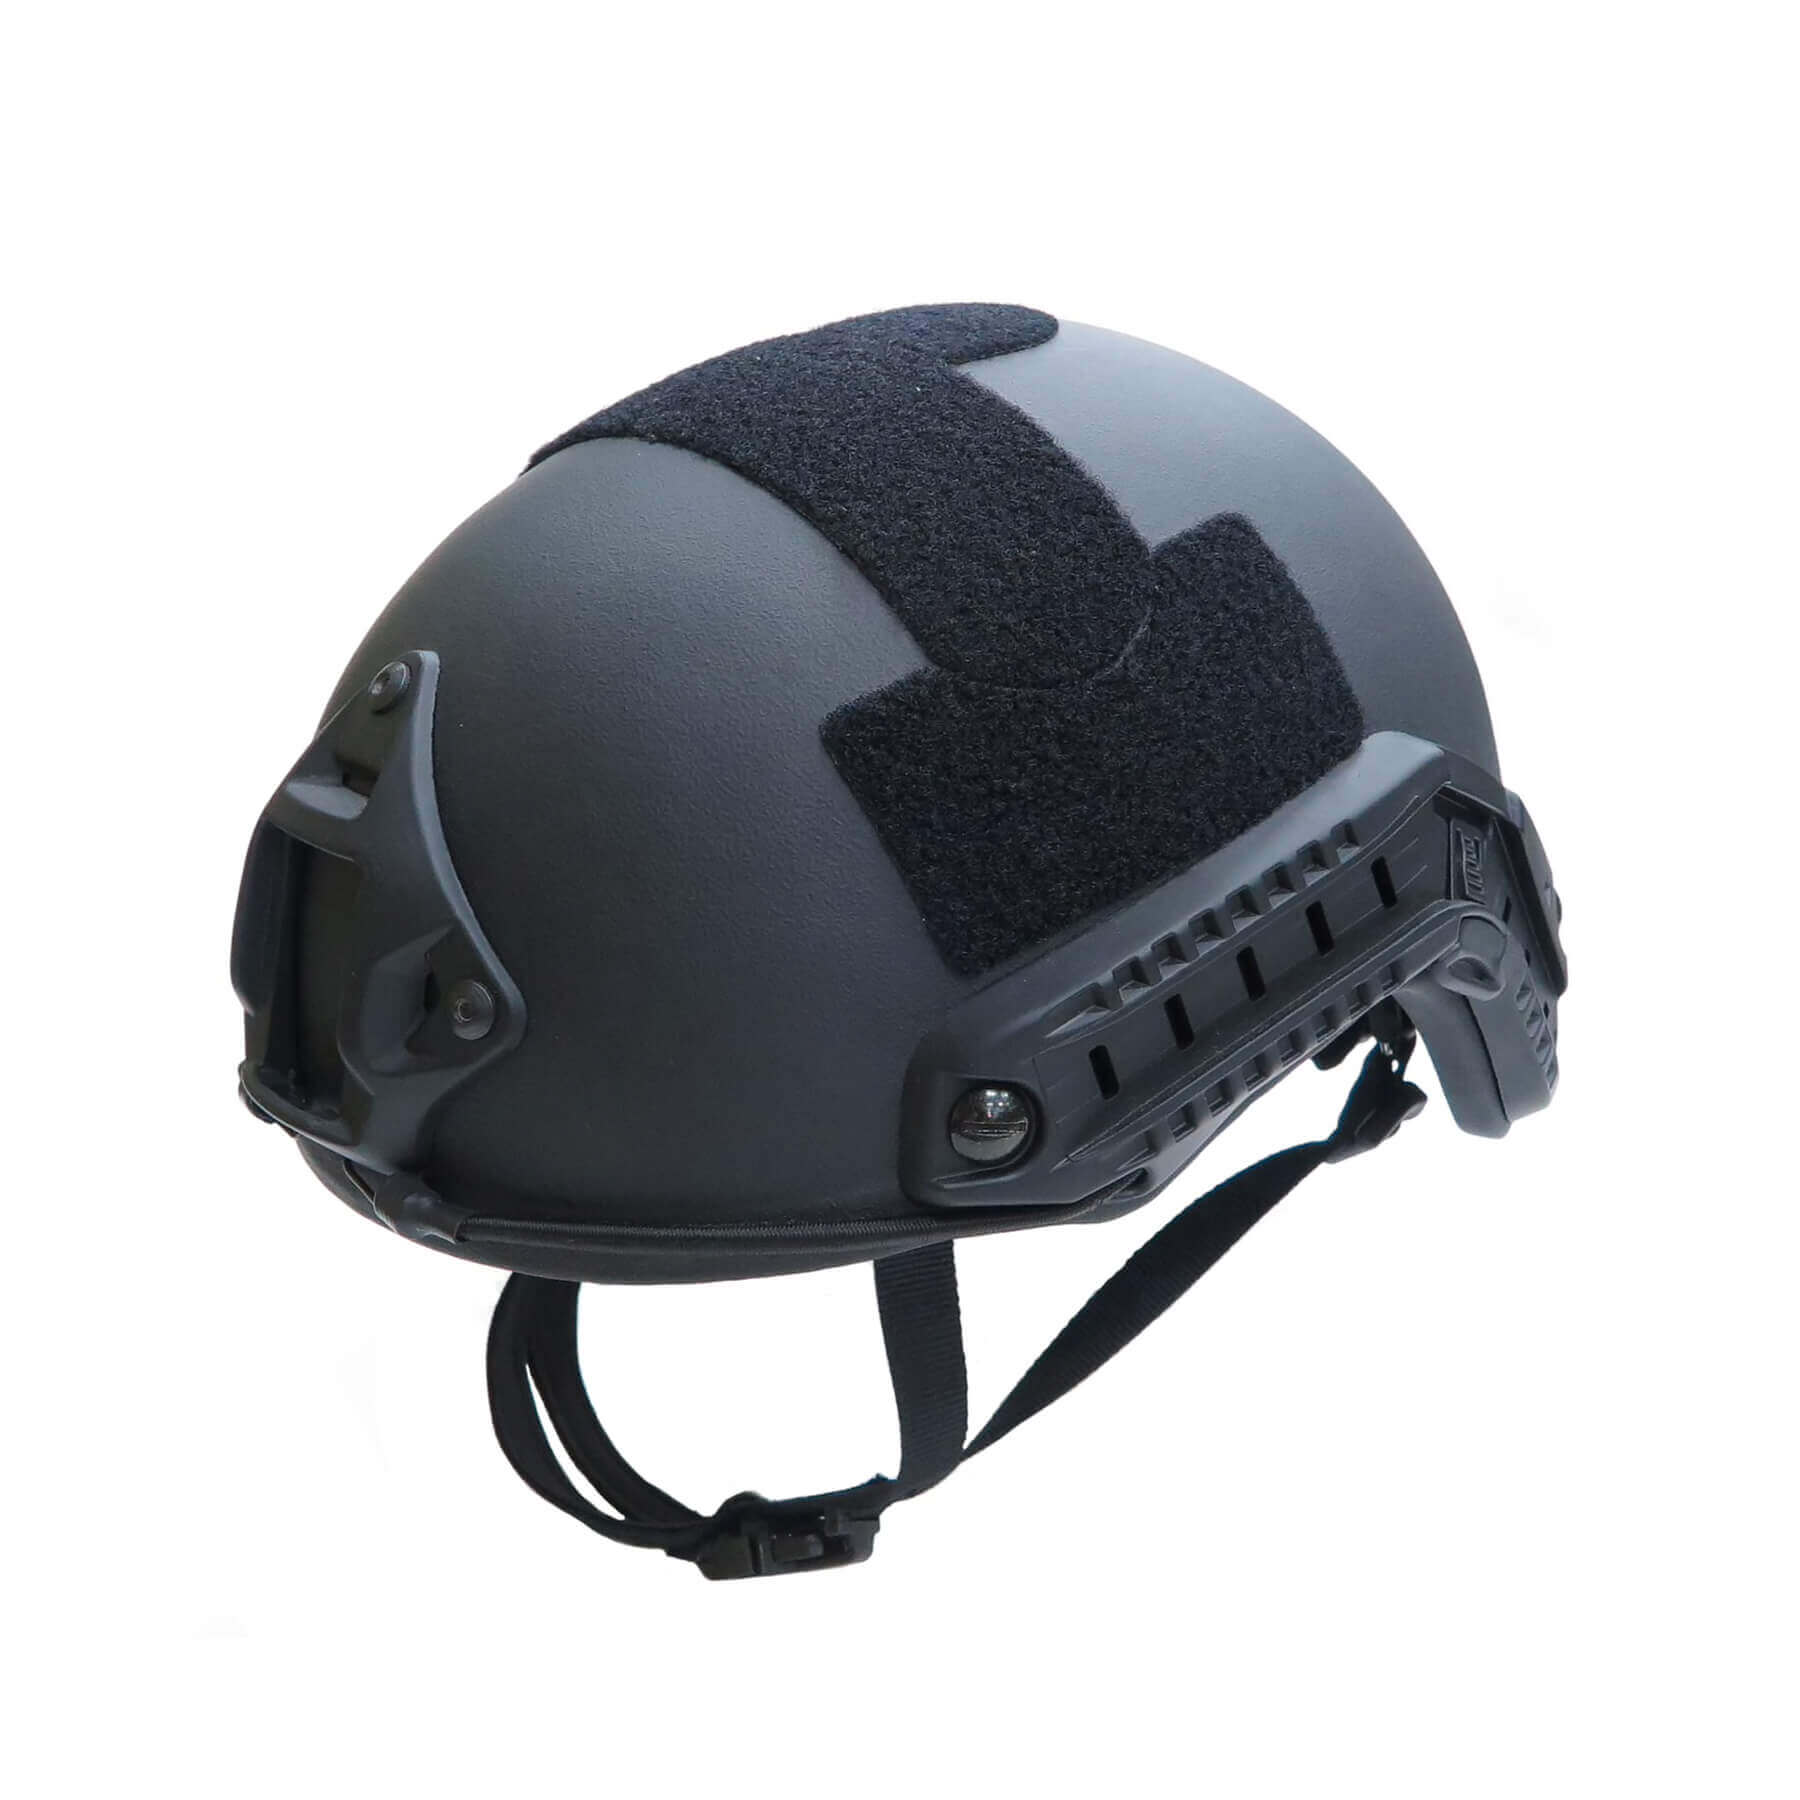 Ballistic High Cut Helmet - Guardian Gear - Lifesaving products